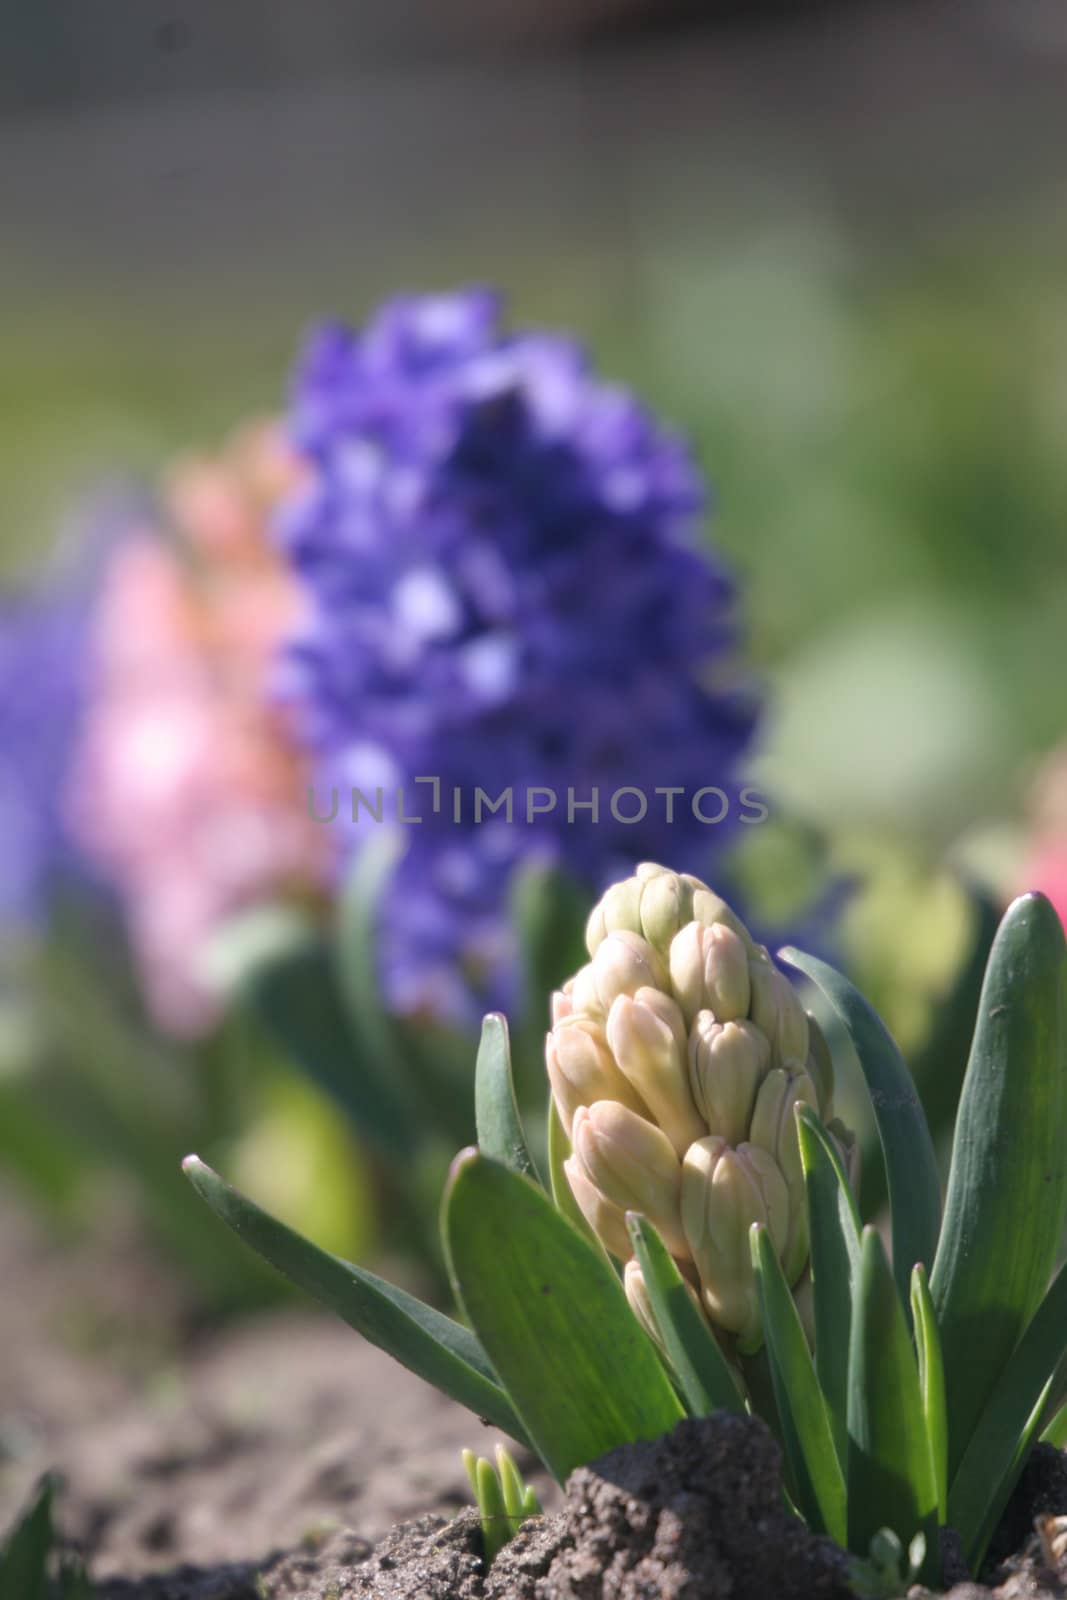 Hyacinth flower by max.domarov